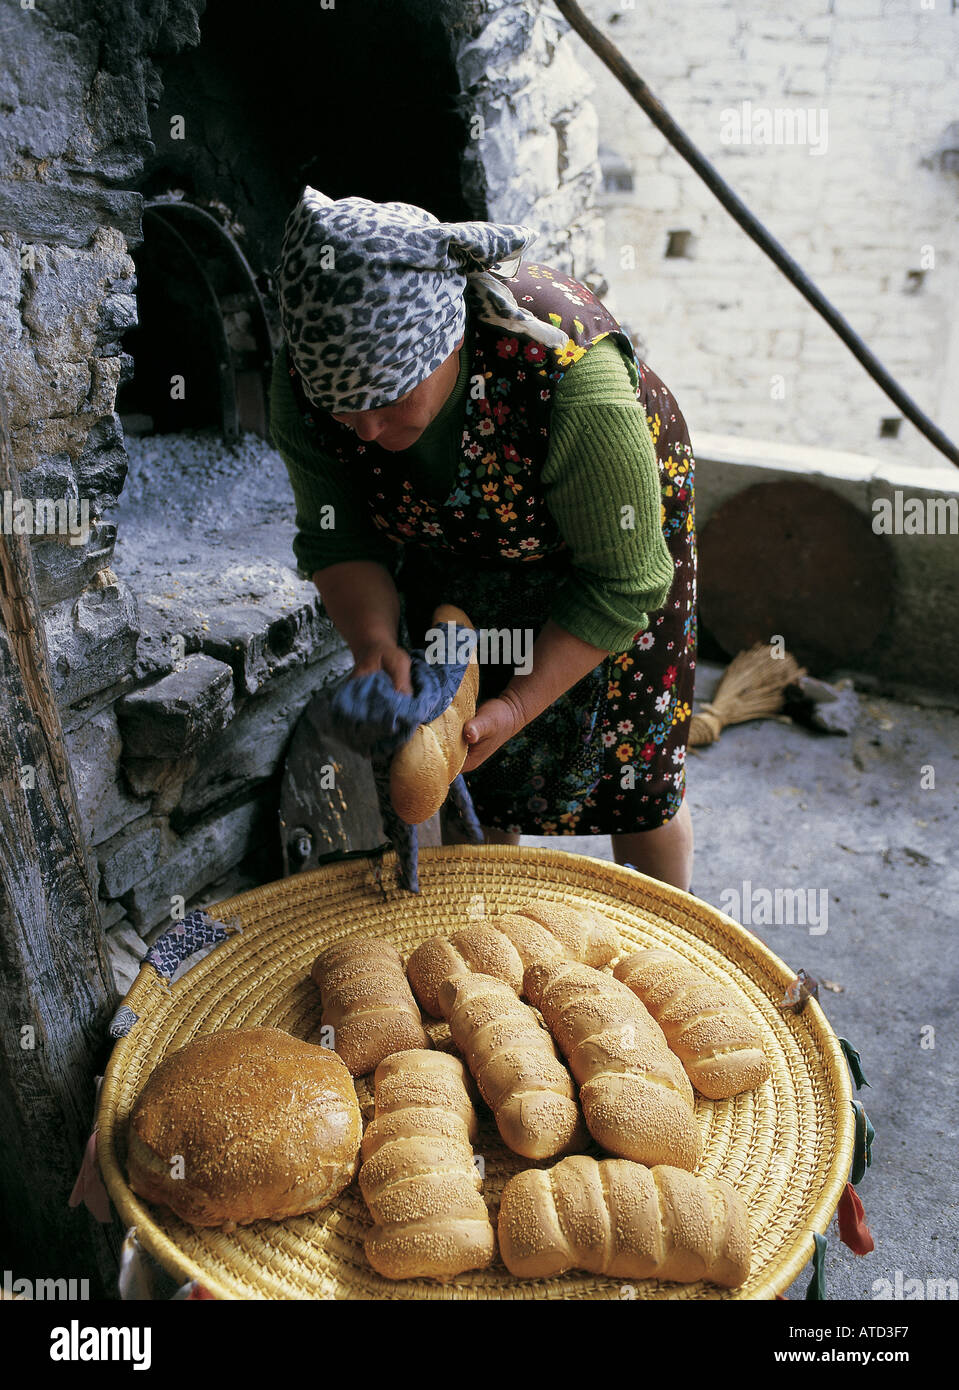 Baking traditional bread Stock Photo